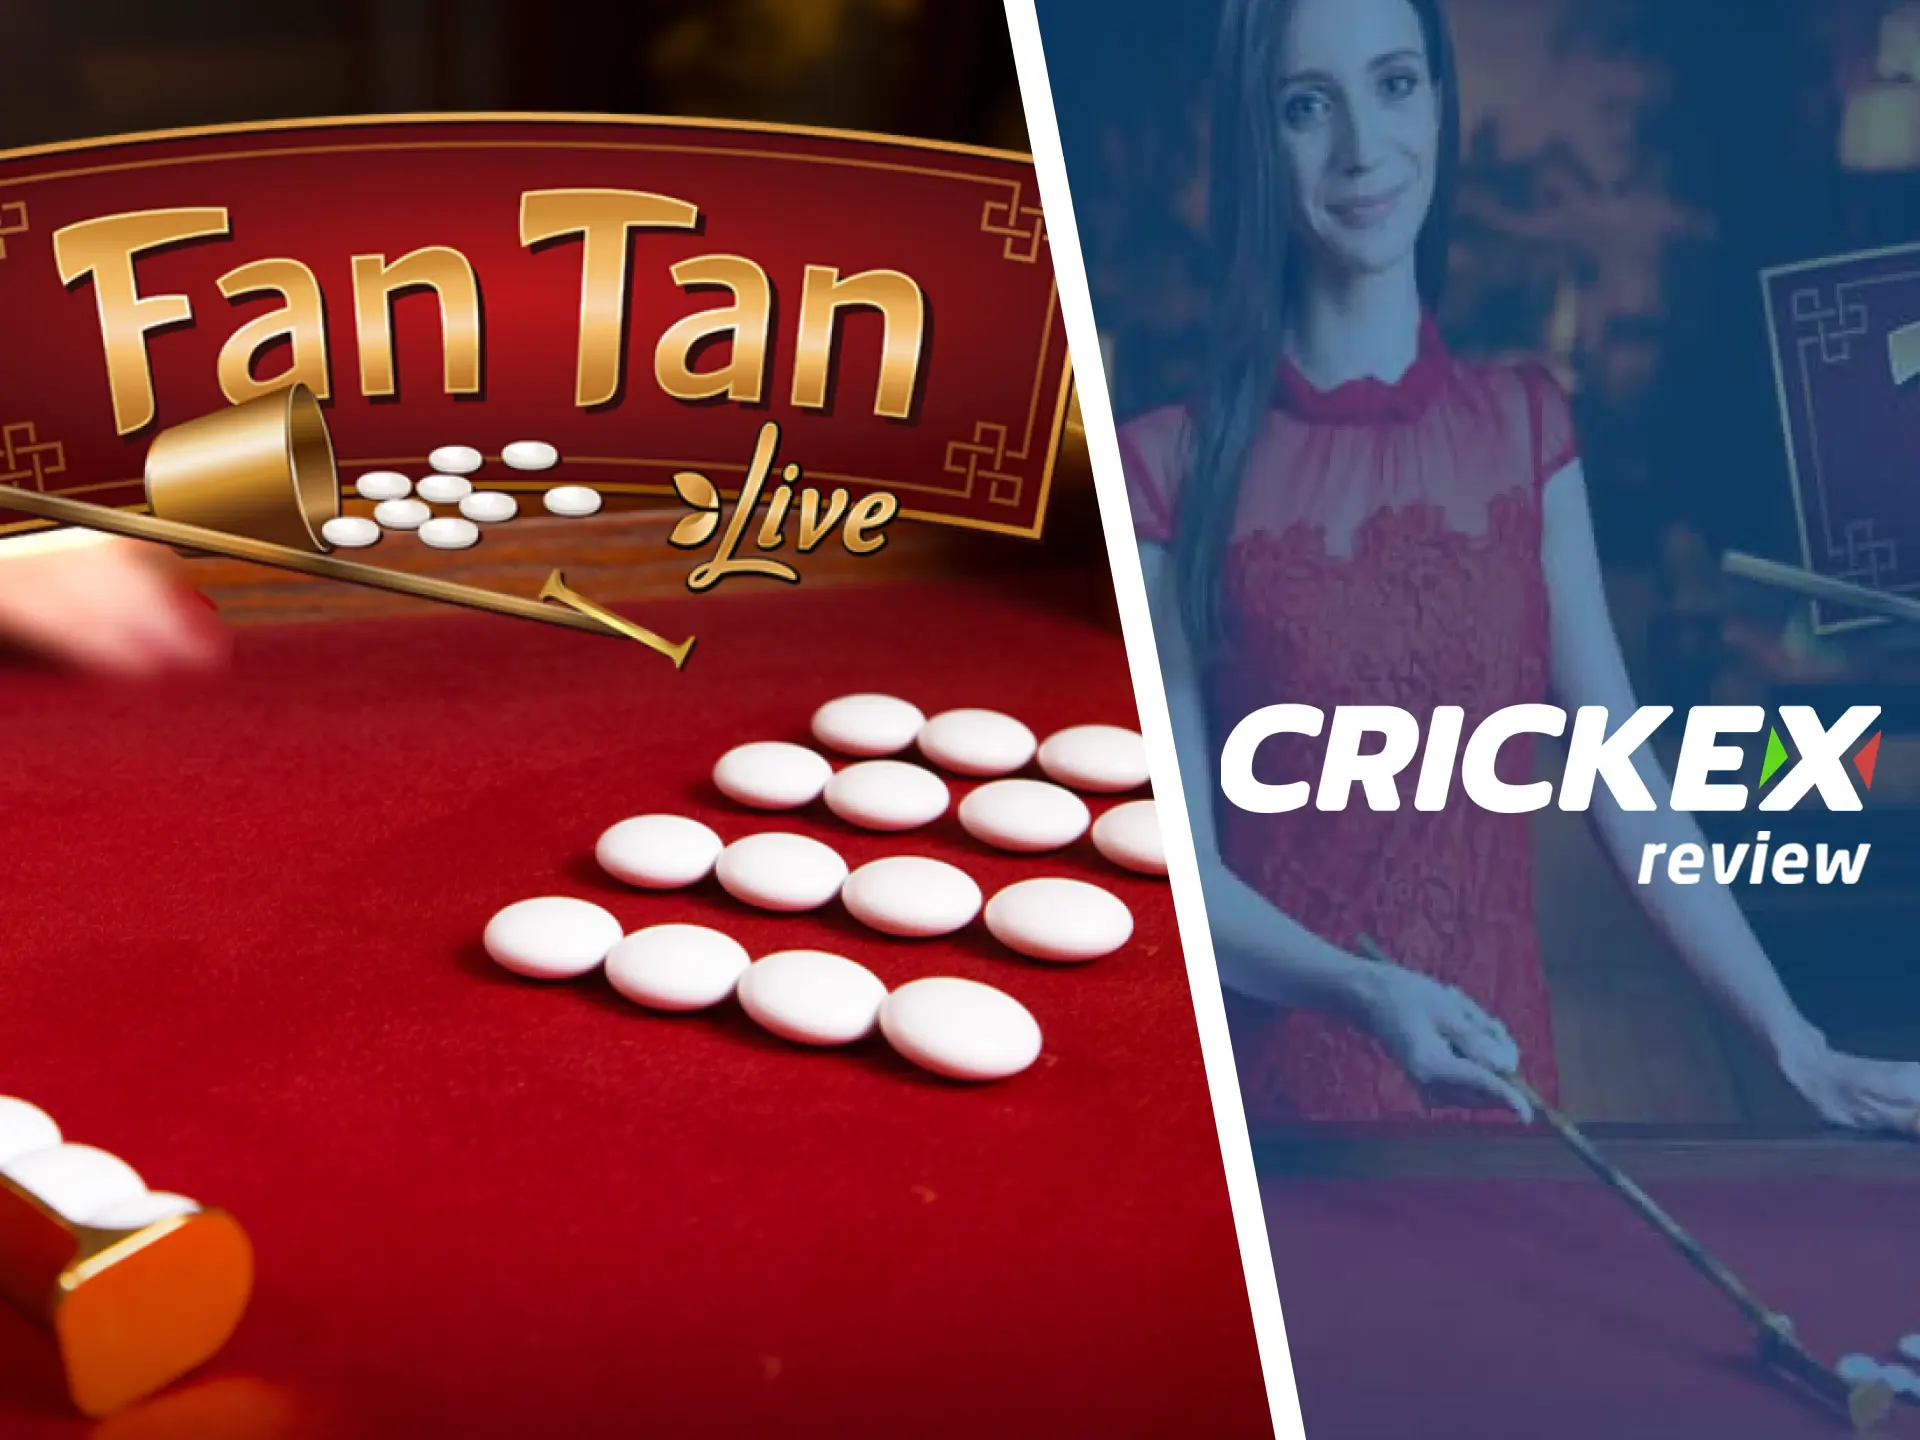 To play Crickex, choose Fan Tan.